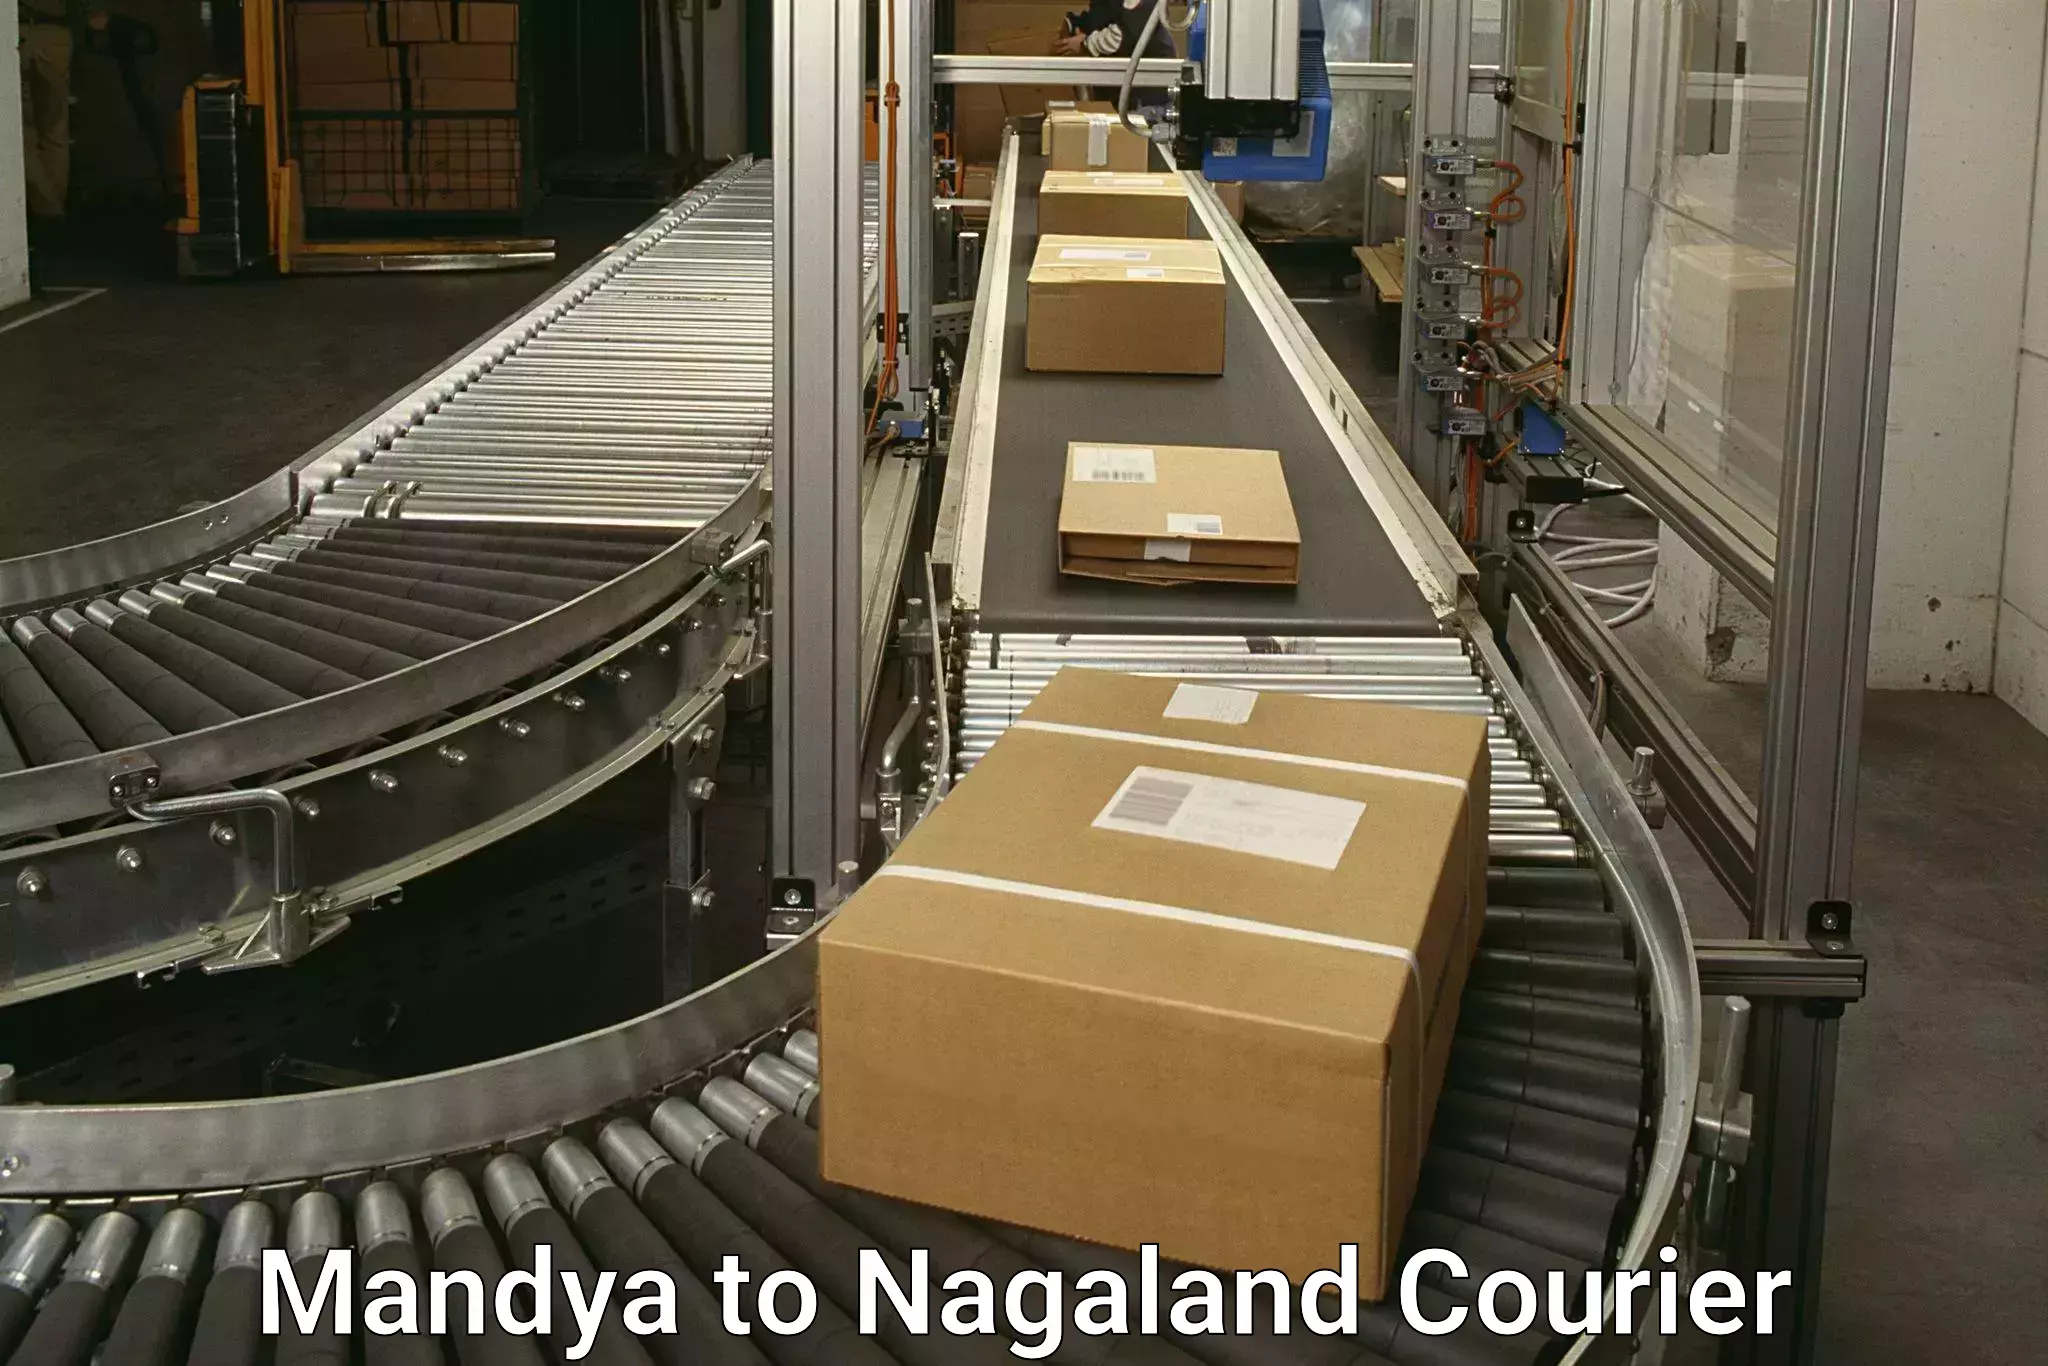 Subscription-based courier Mandya to Nagaland